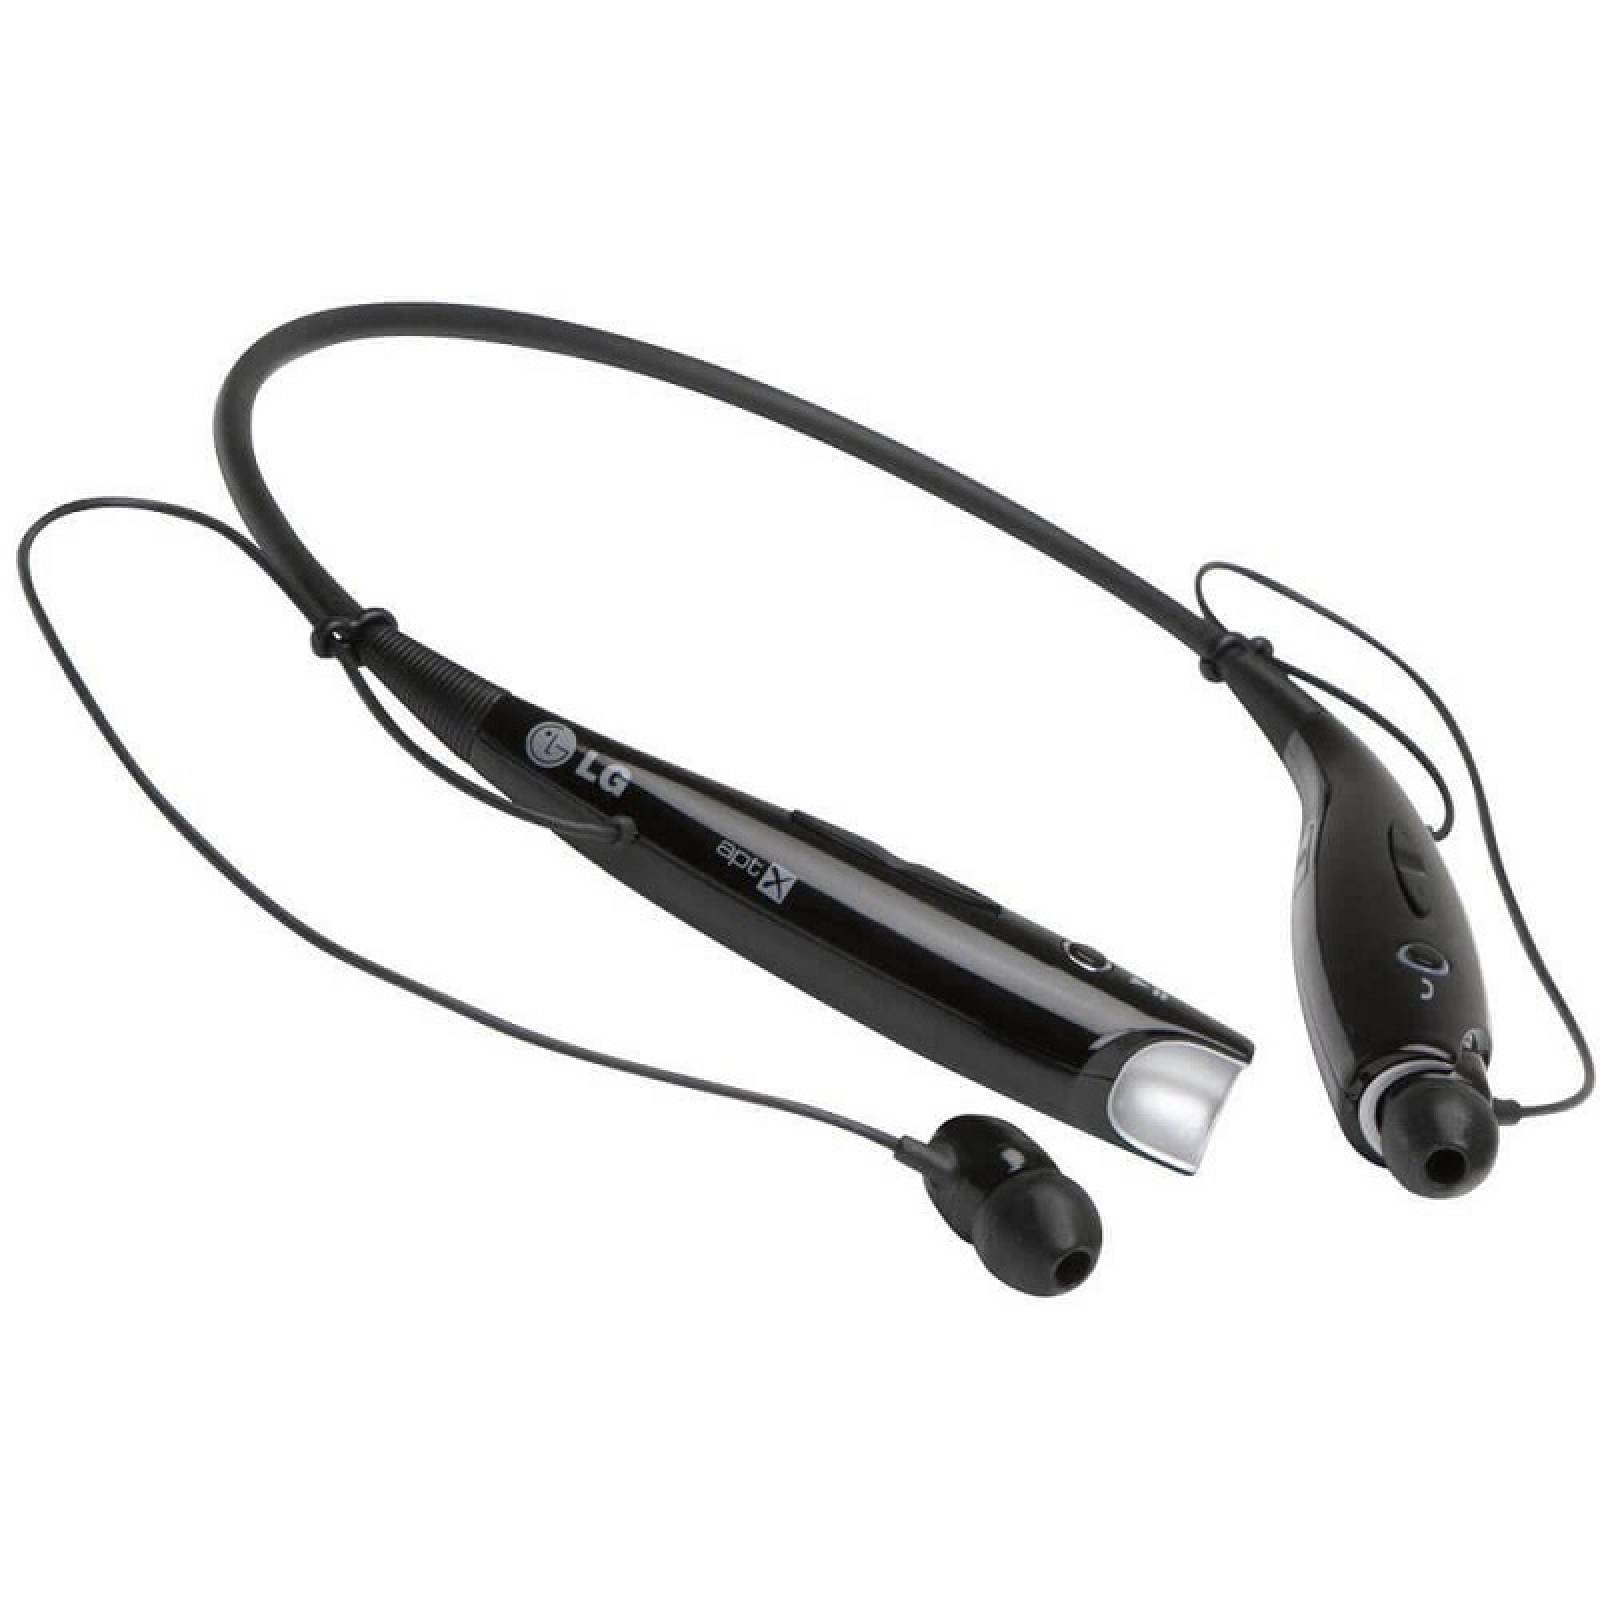 Audifonos deportivos LG Bluetooth Microfono Negro HBS730 - Reacondicionado